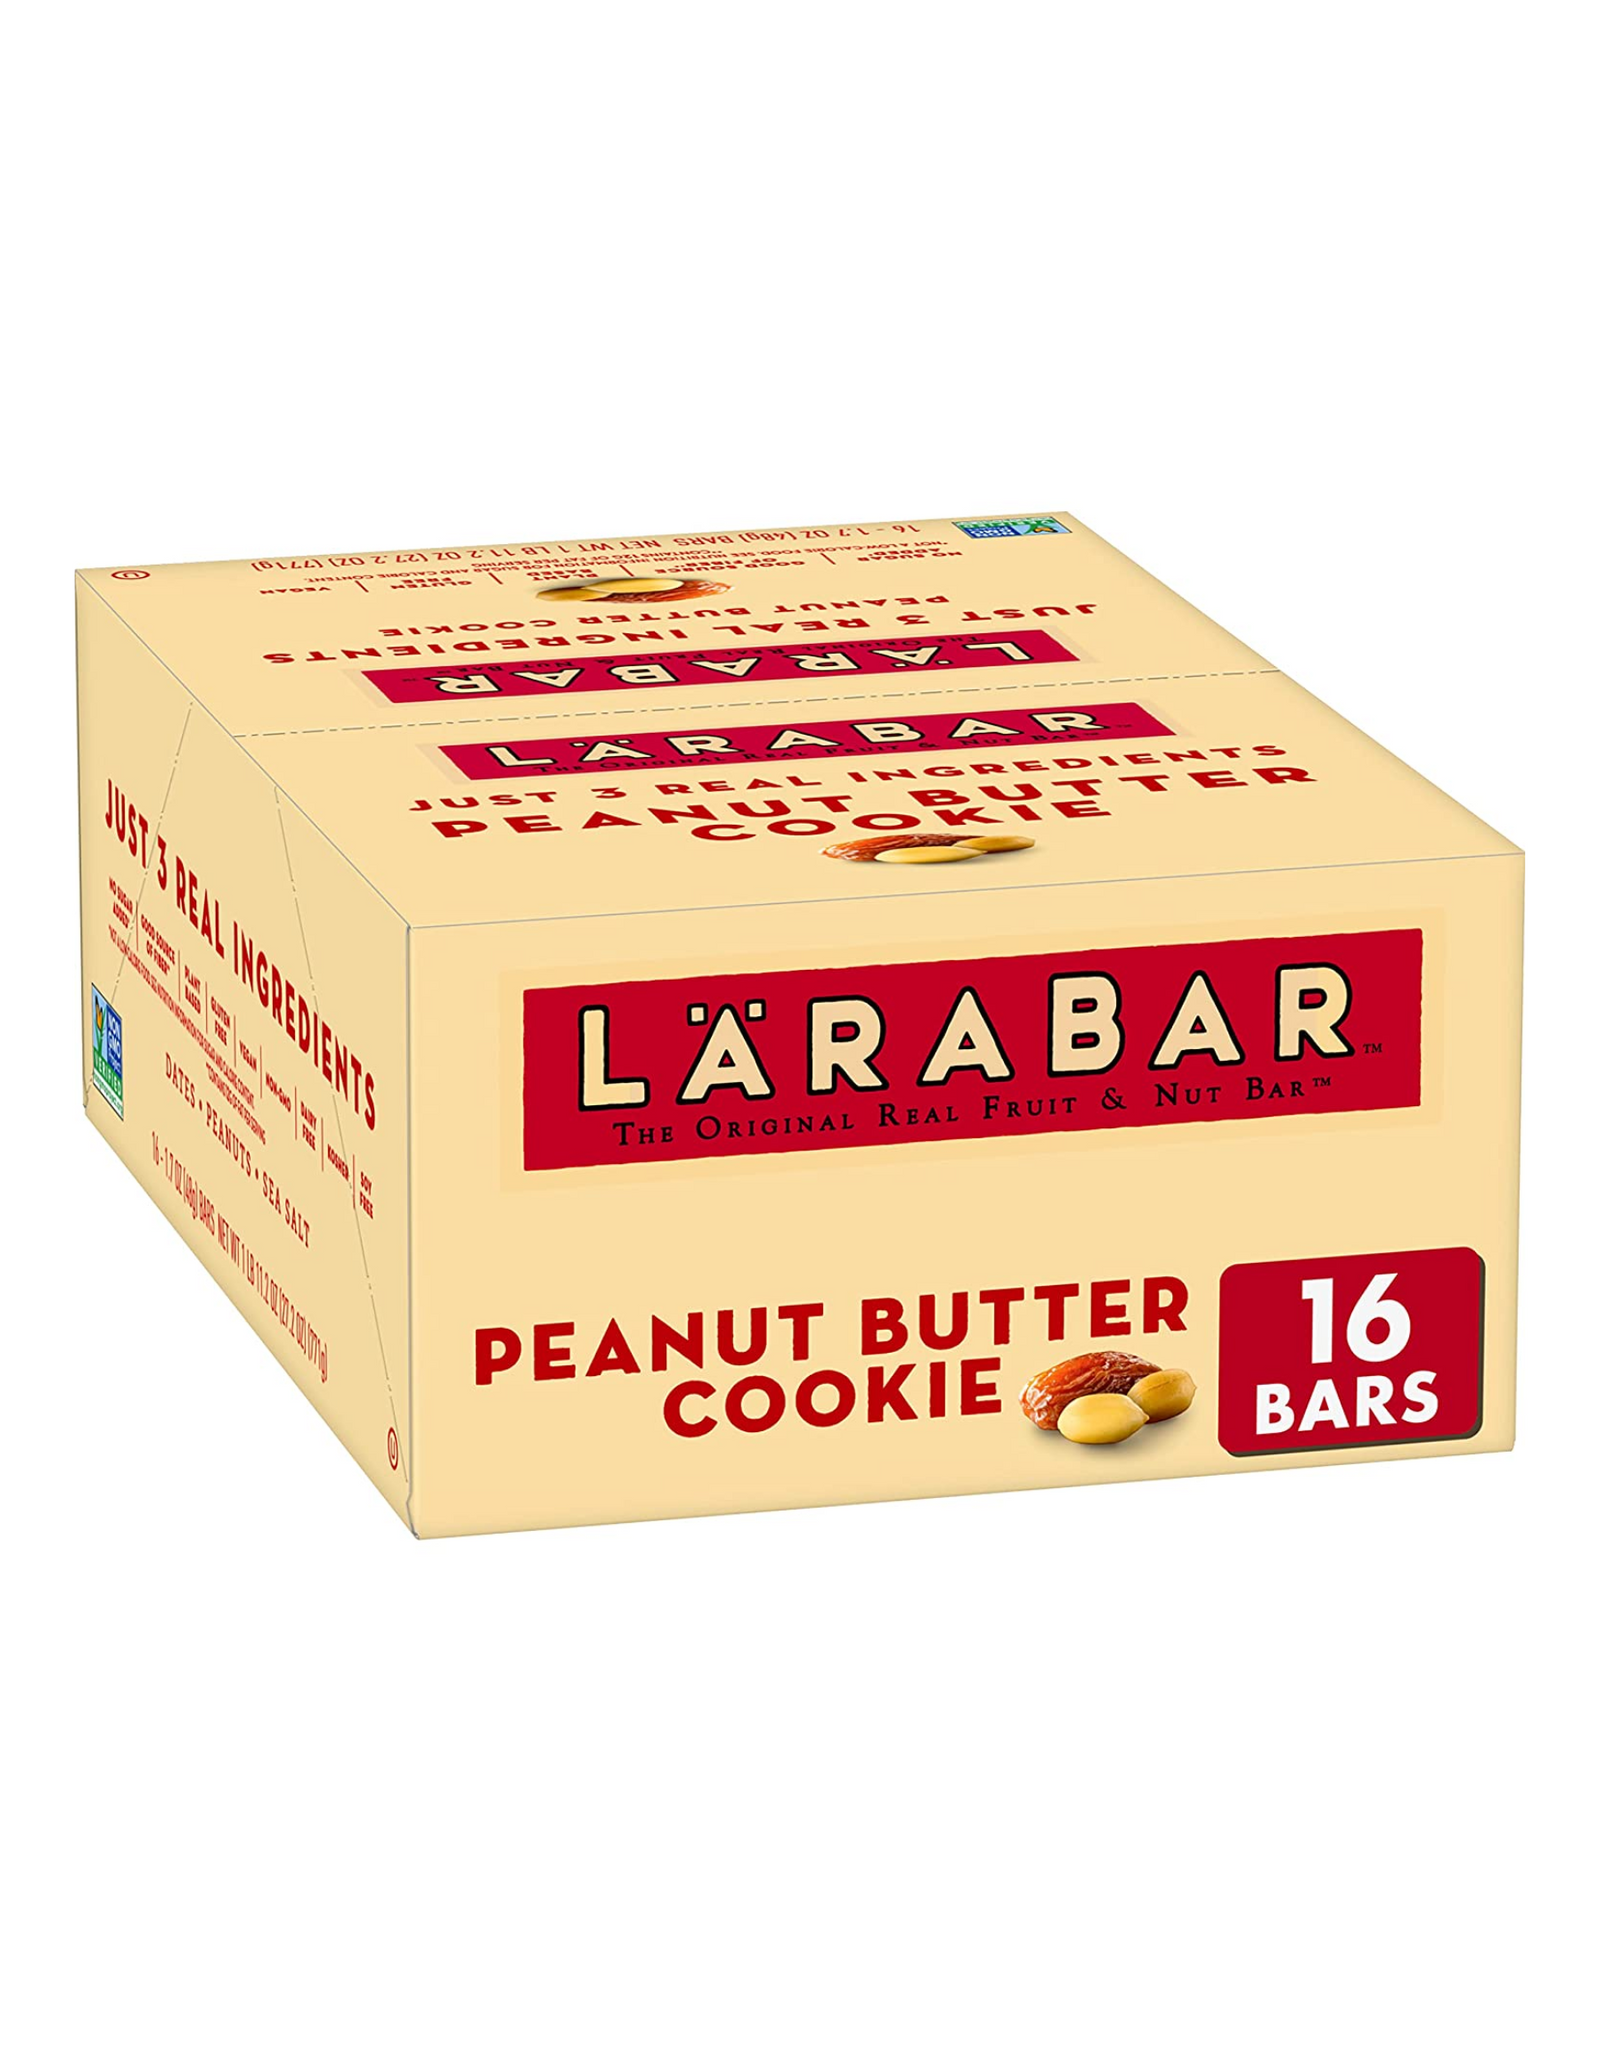 Larabar Peanut Butter Cookie, Original Real Fruit and Nut Bar, 1.7 oz, 16 Count